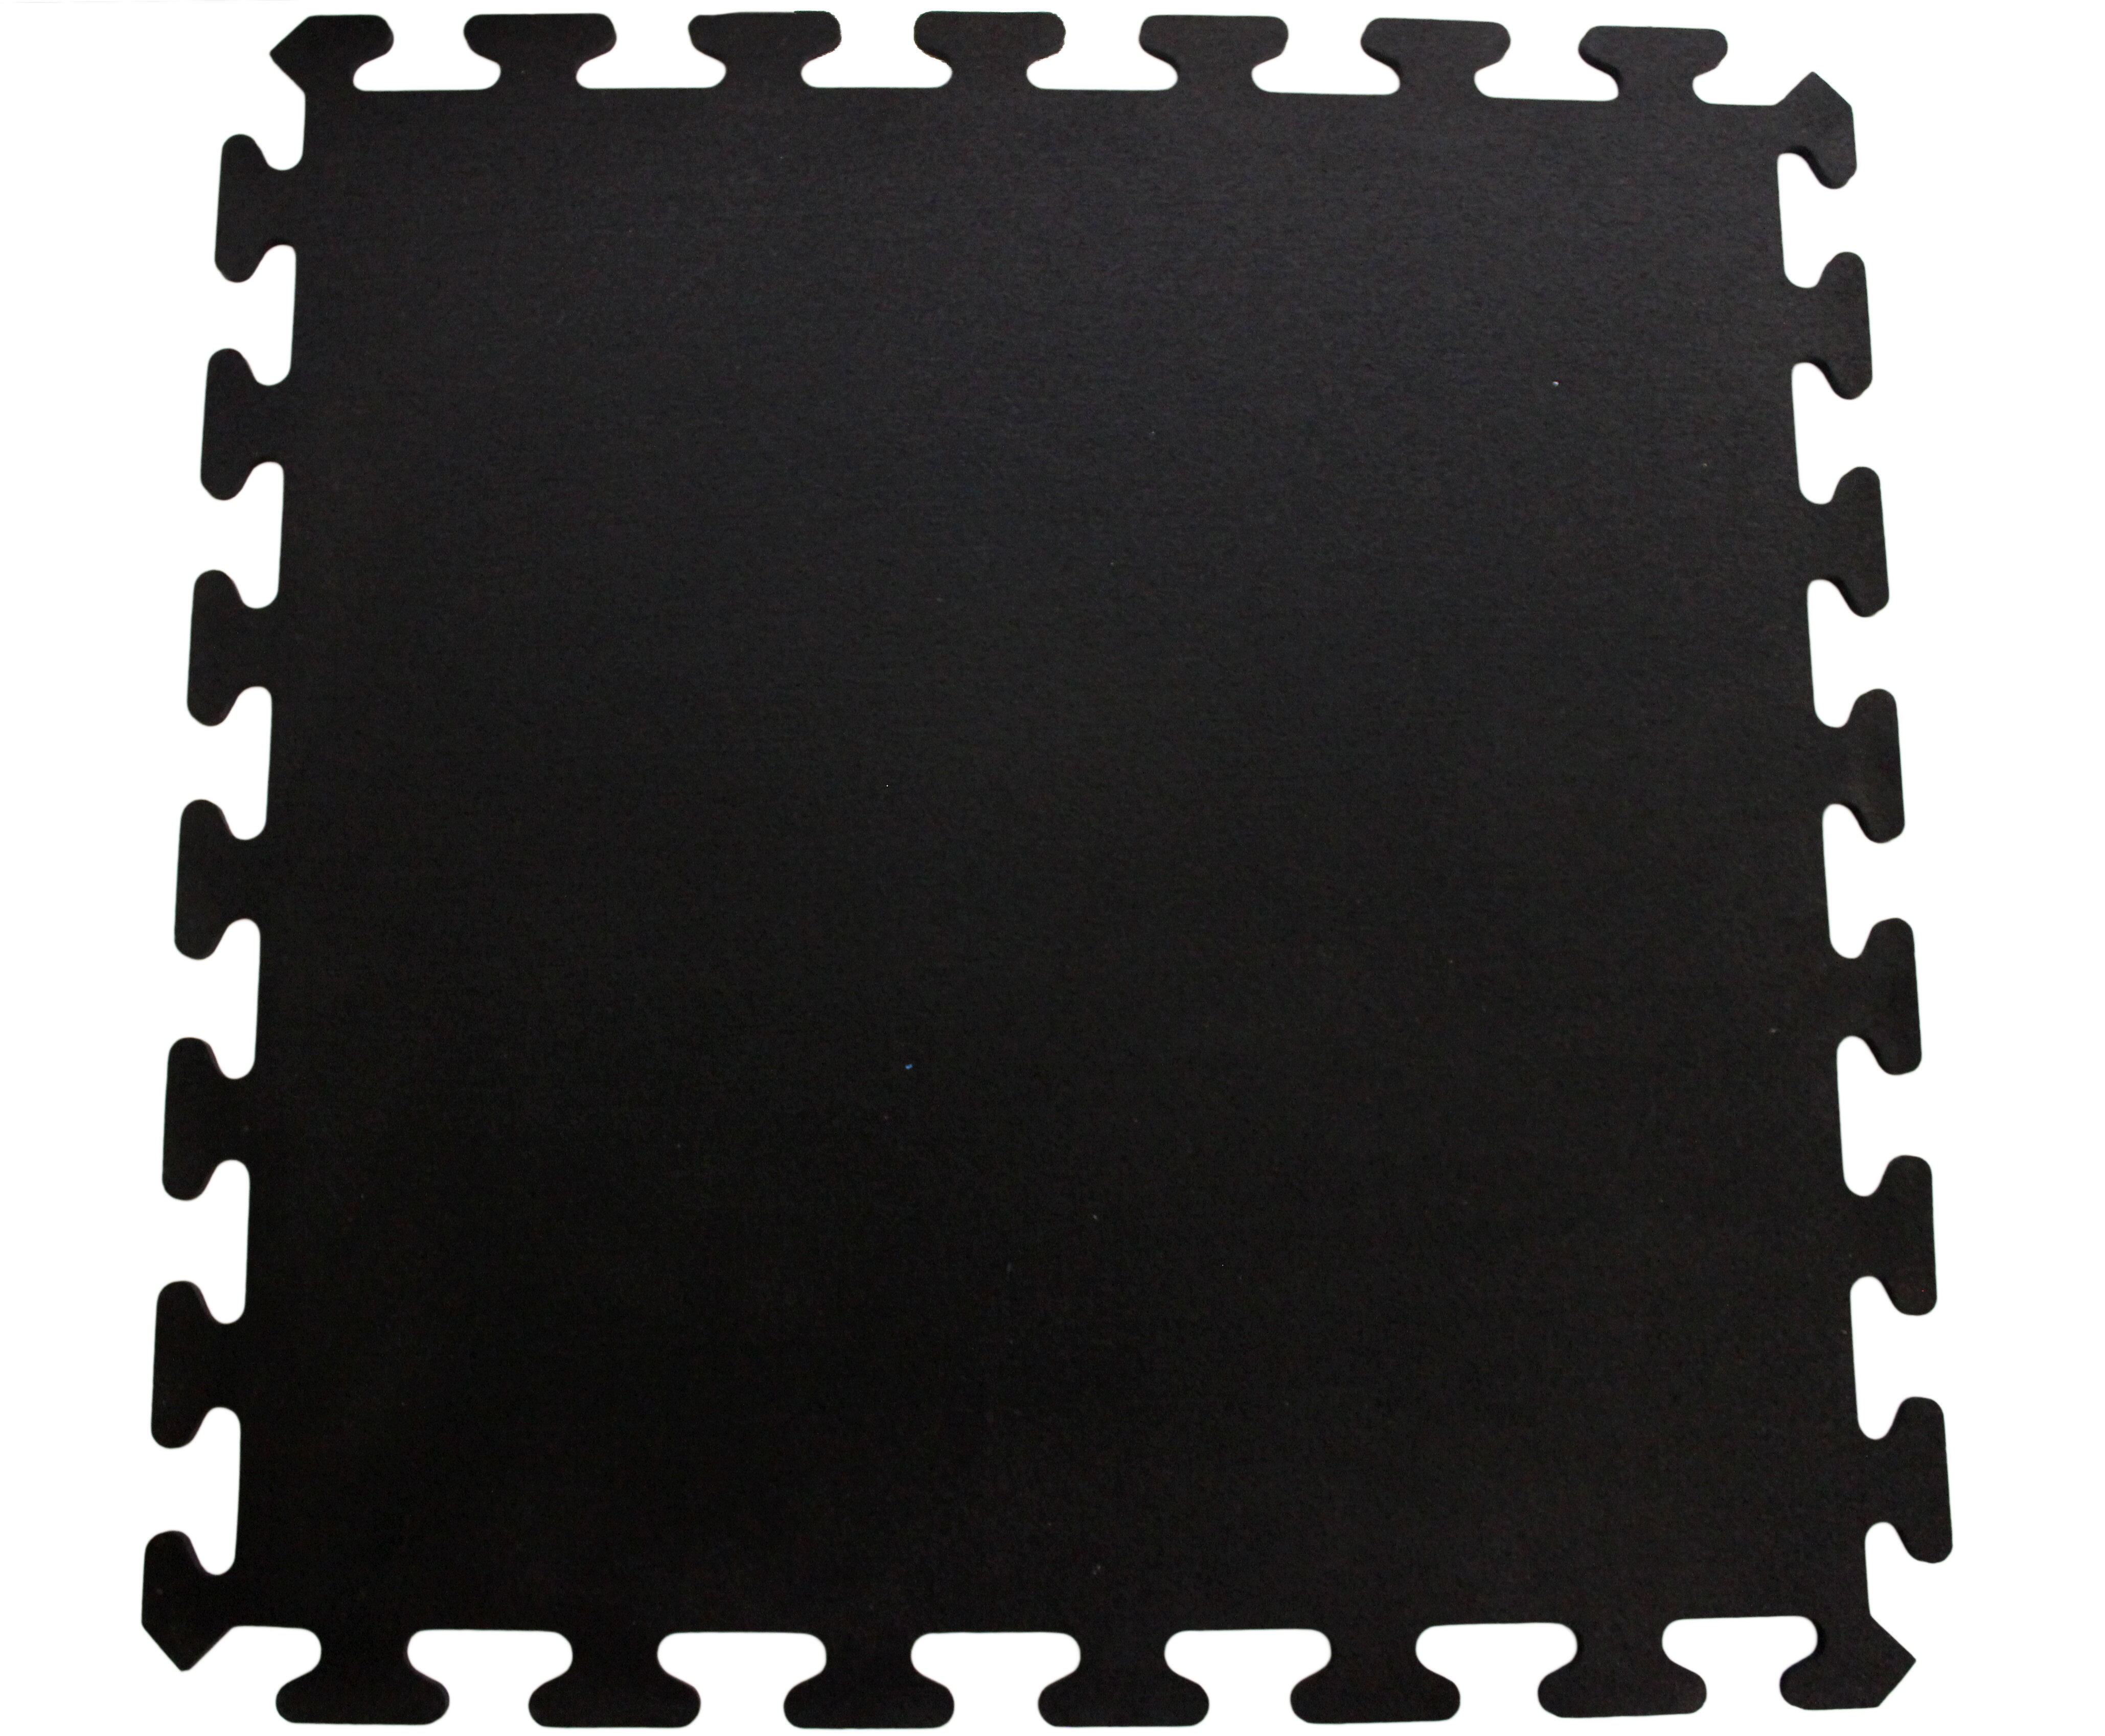 23 x 23 Interlocking Rubber Tile Solid Black Center Single Tile American Floor Mats Sport 8mm Heavy Duty Rubber Flooring 